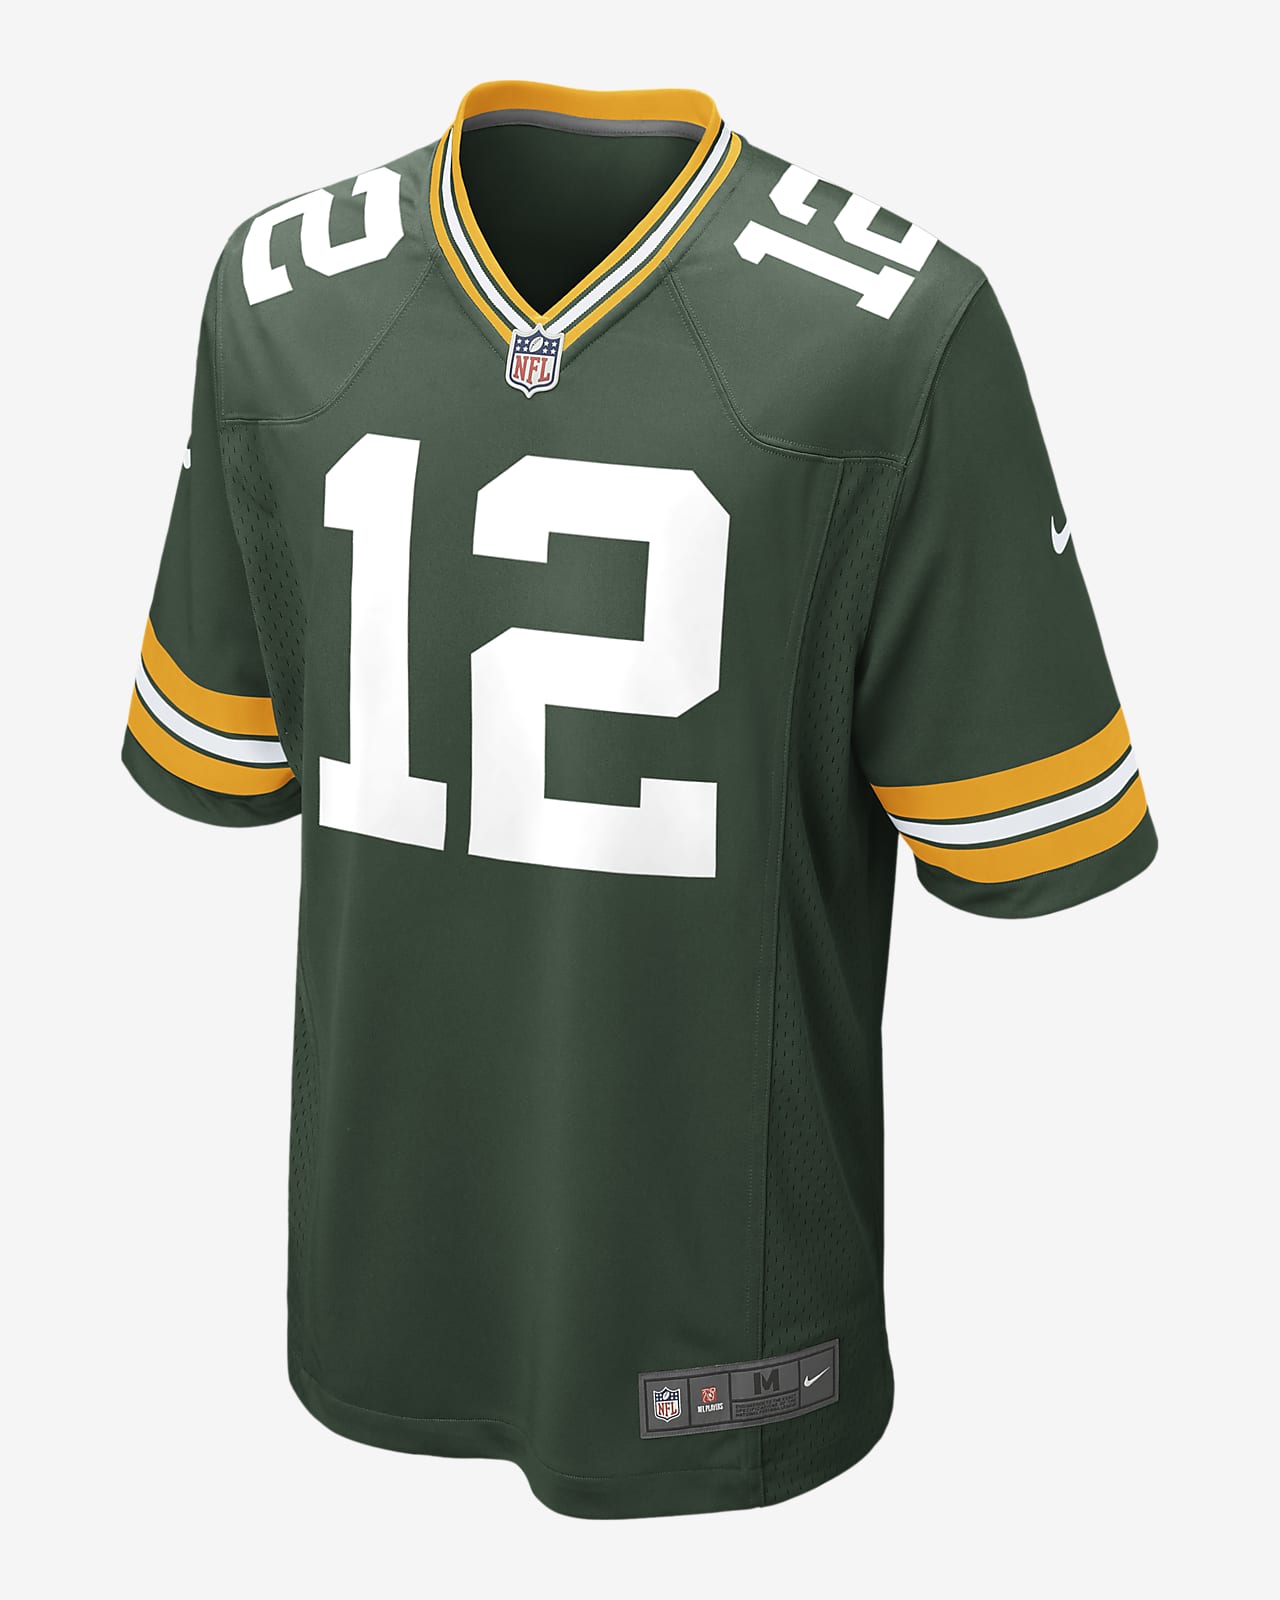 Camisola de jogo de futebol americano NFL Green Bay Packers (Aaron Rodgers) para homem